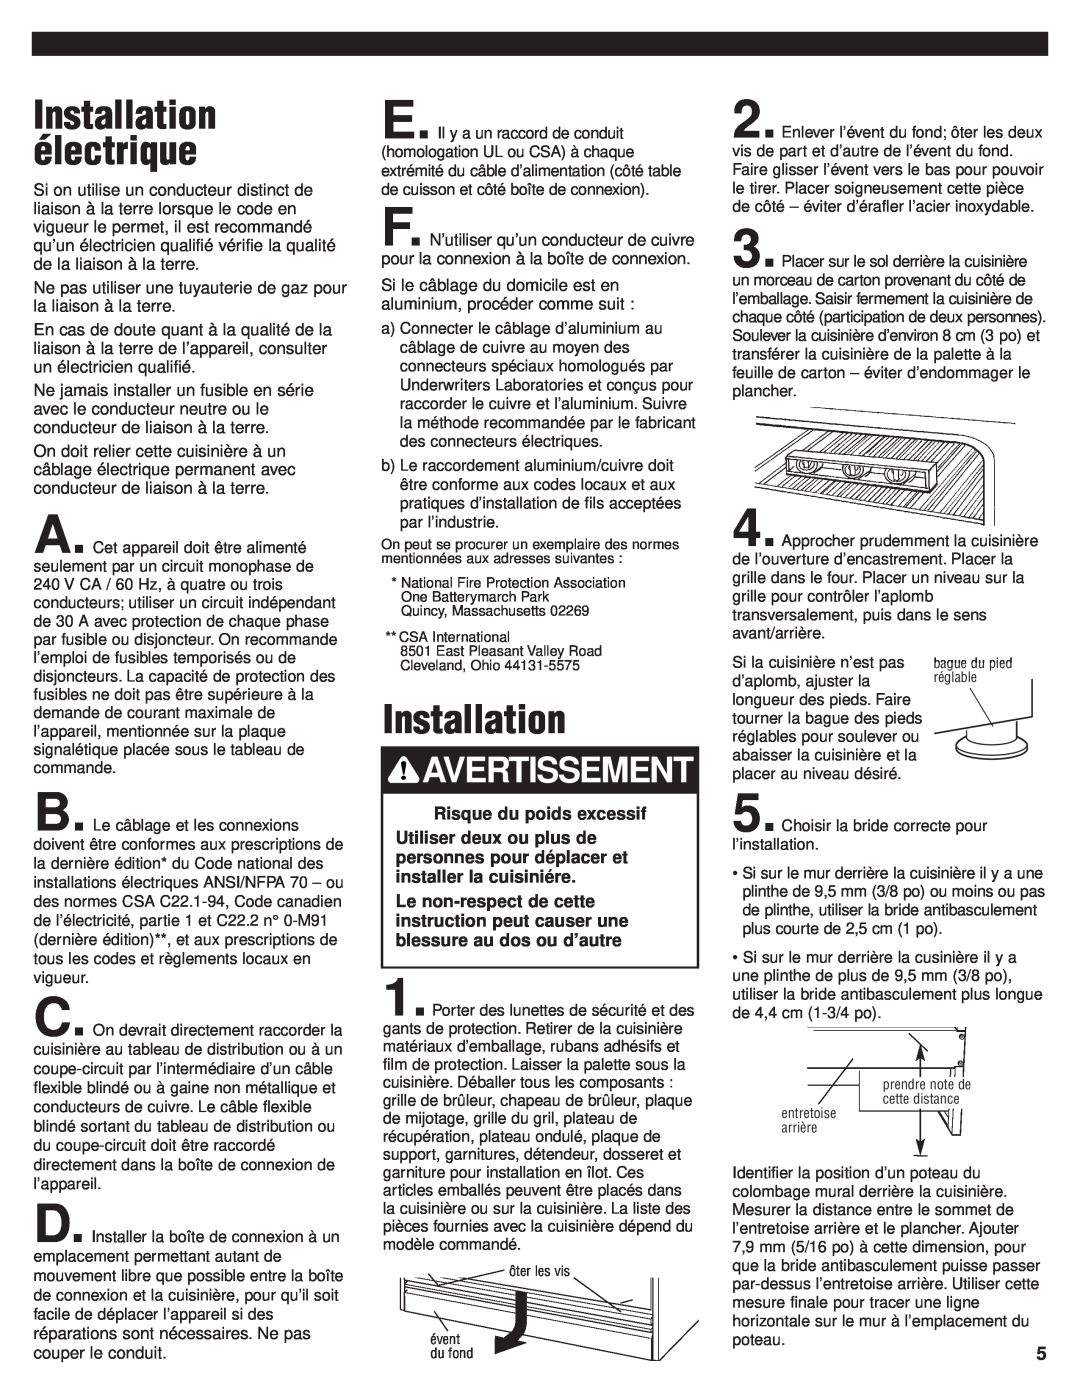 KitchenAid 8301169 installation instructions Installation électrique, Avertissement 